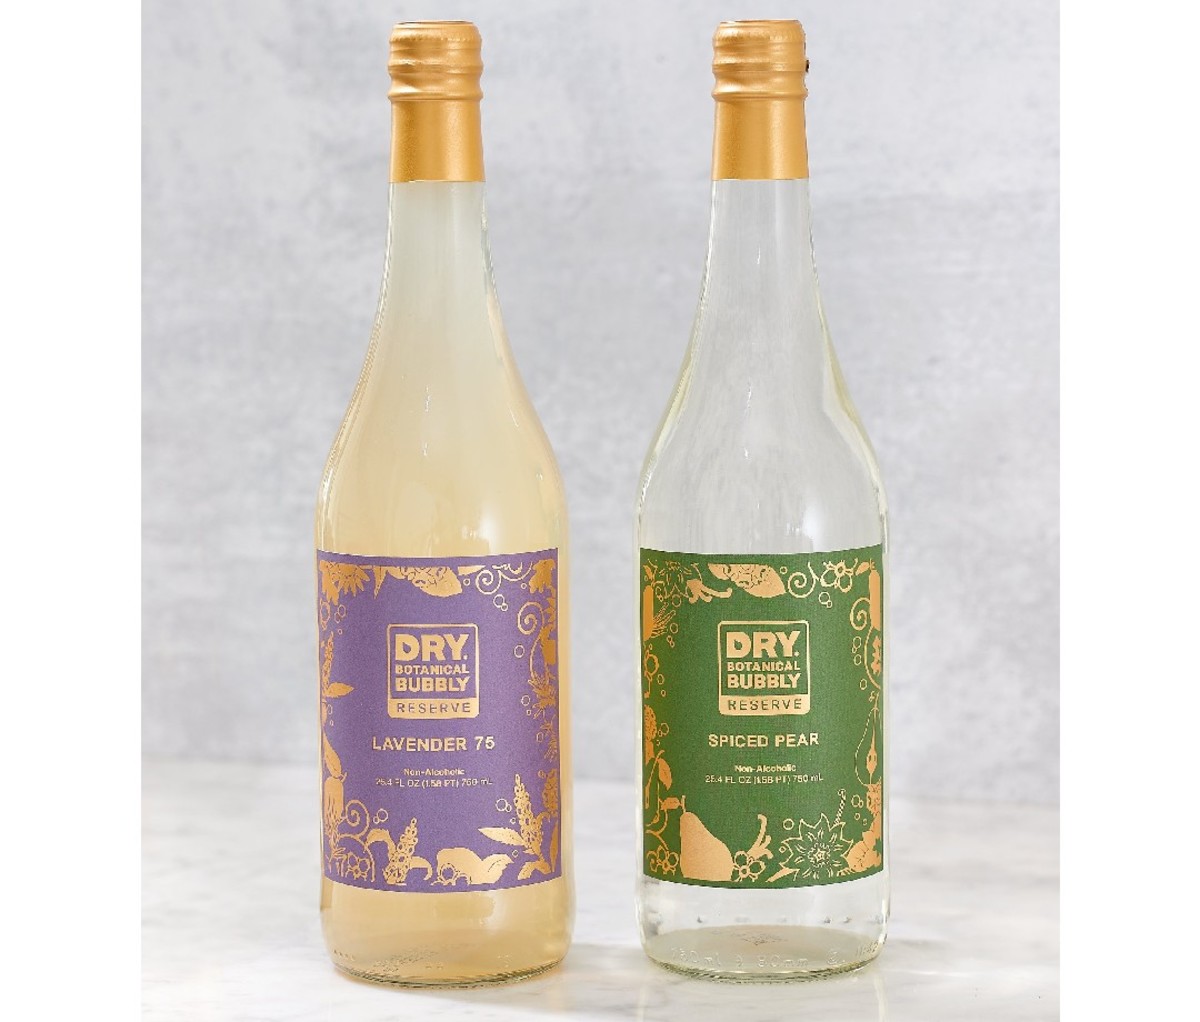 Two bottles of DRY Soda Co, Botanical Bubbly Reserve